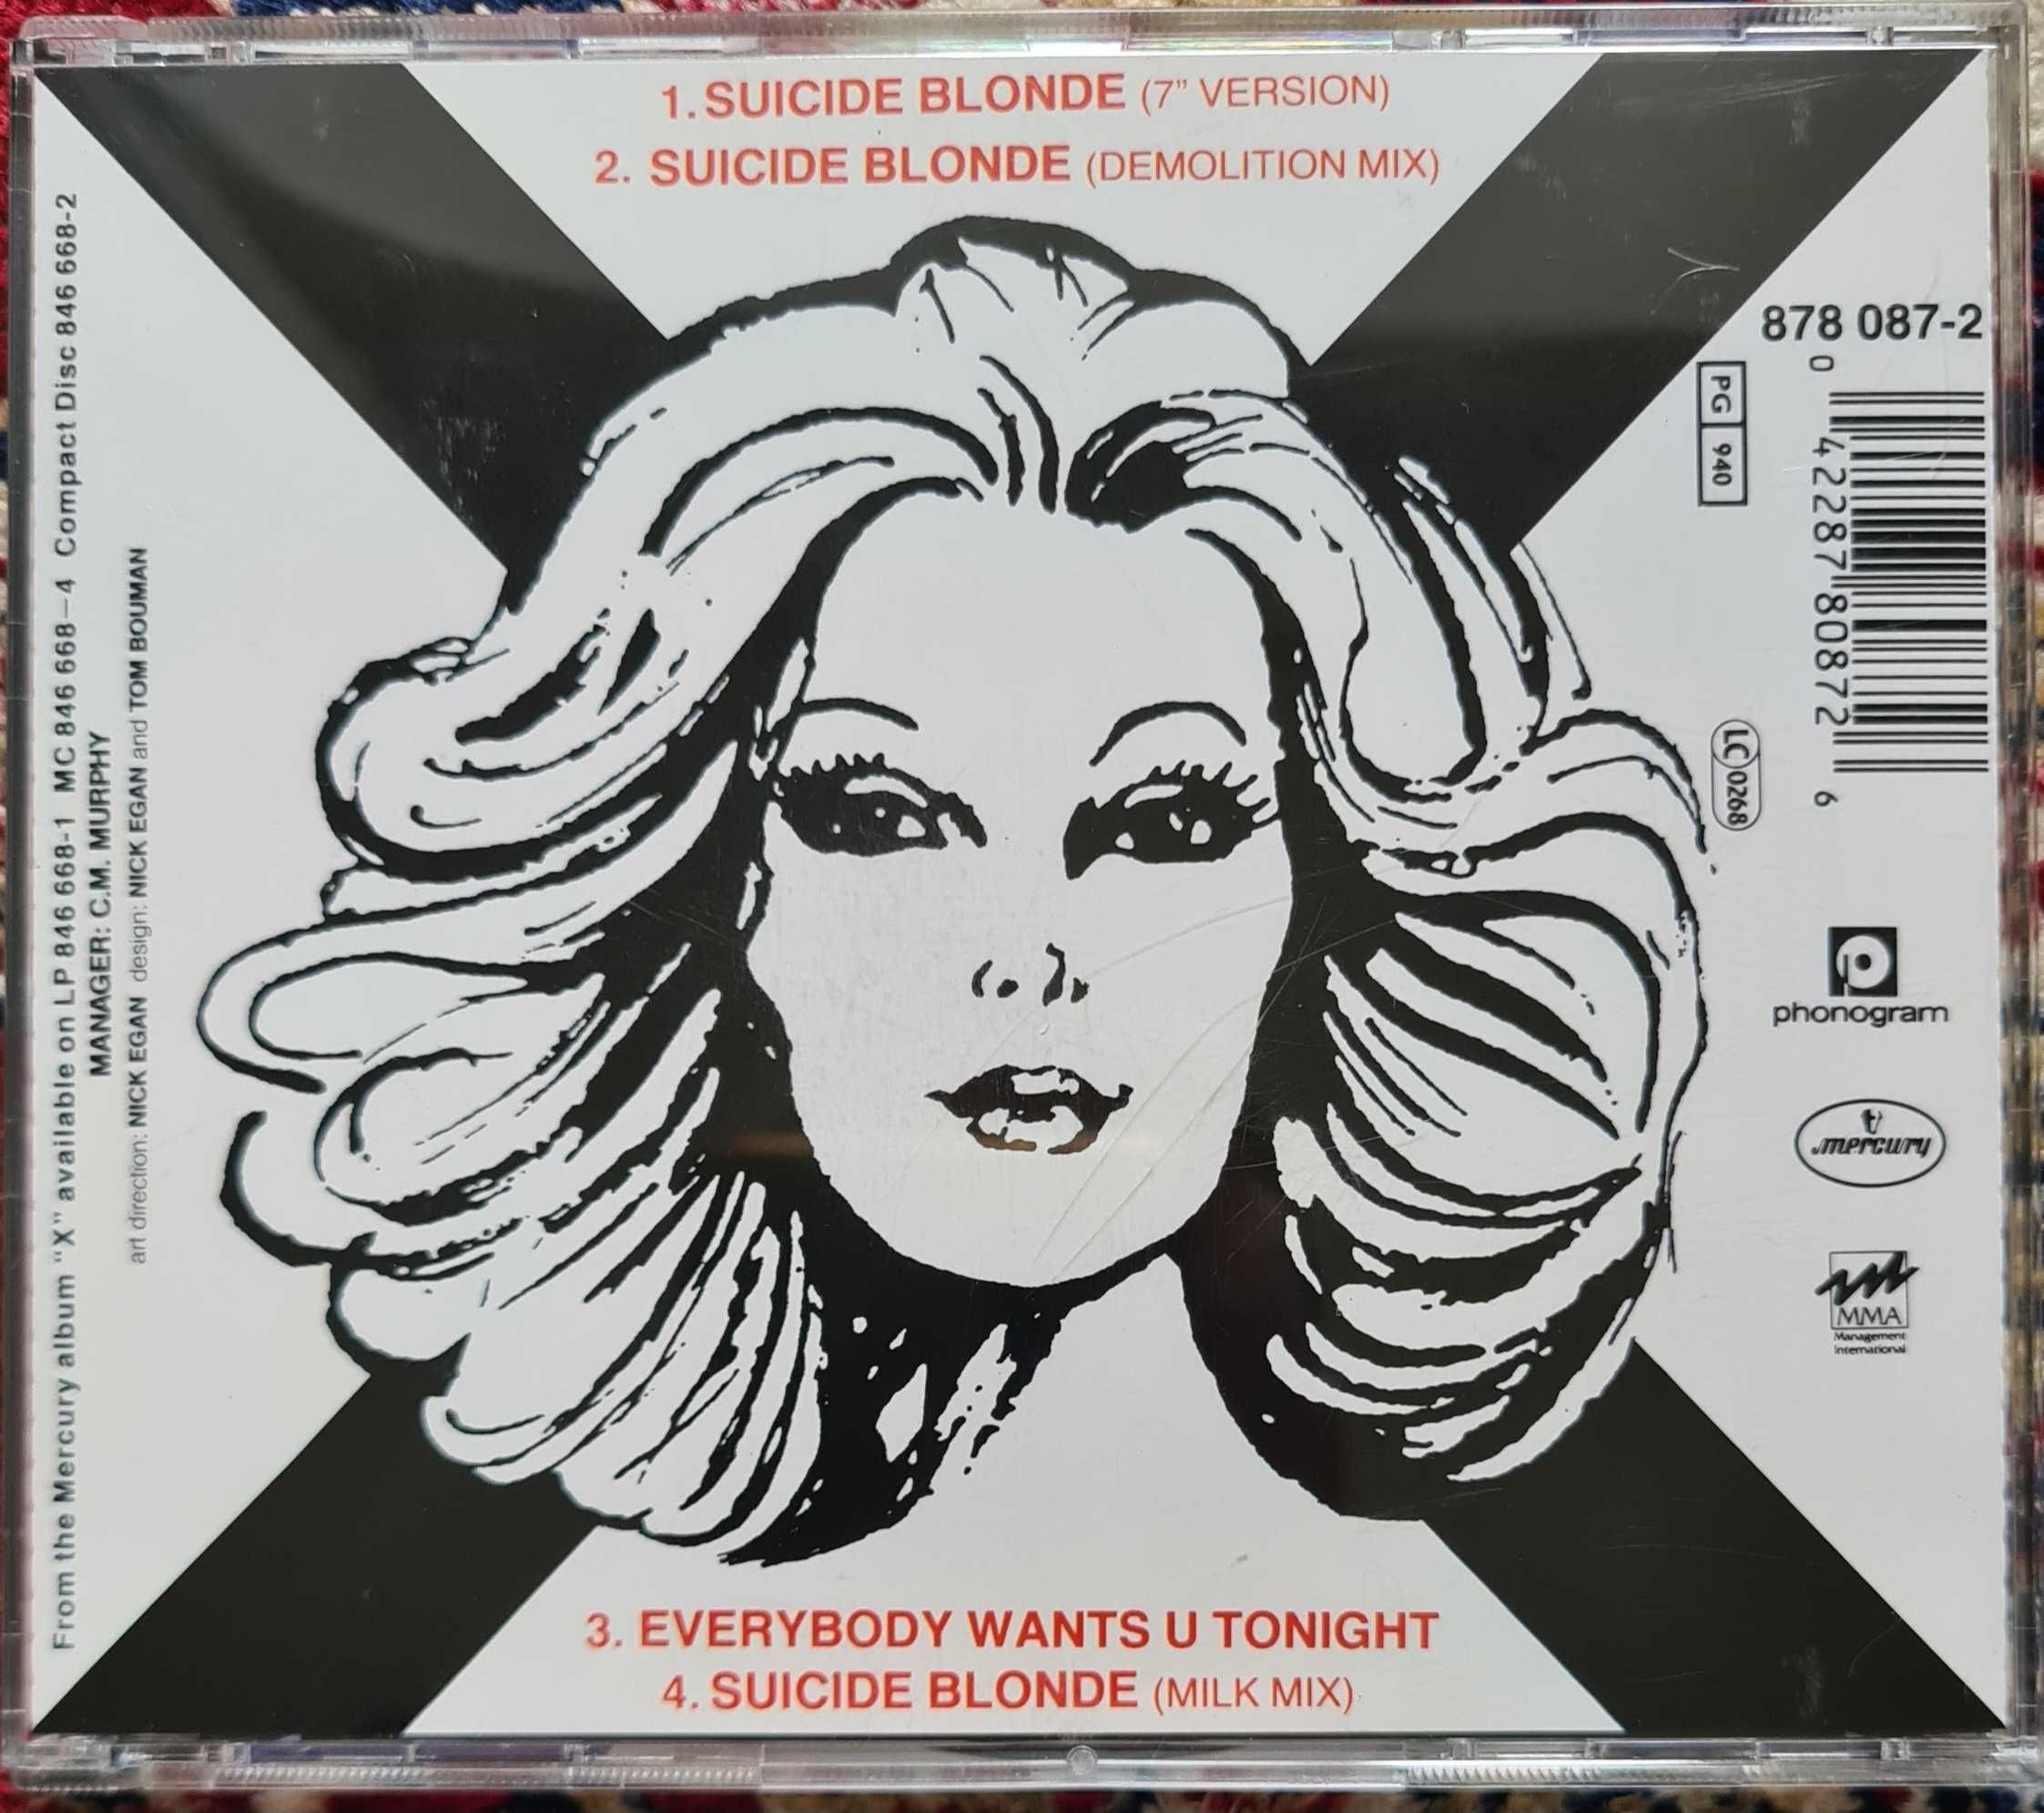 INXS "Suicide Blonde " фірмовий CD single